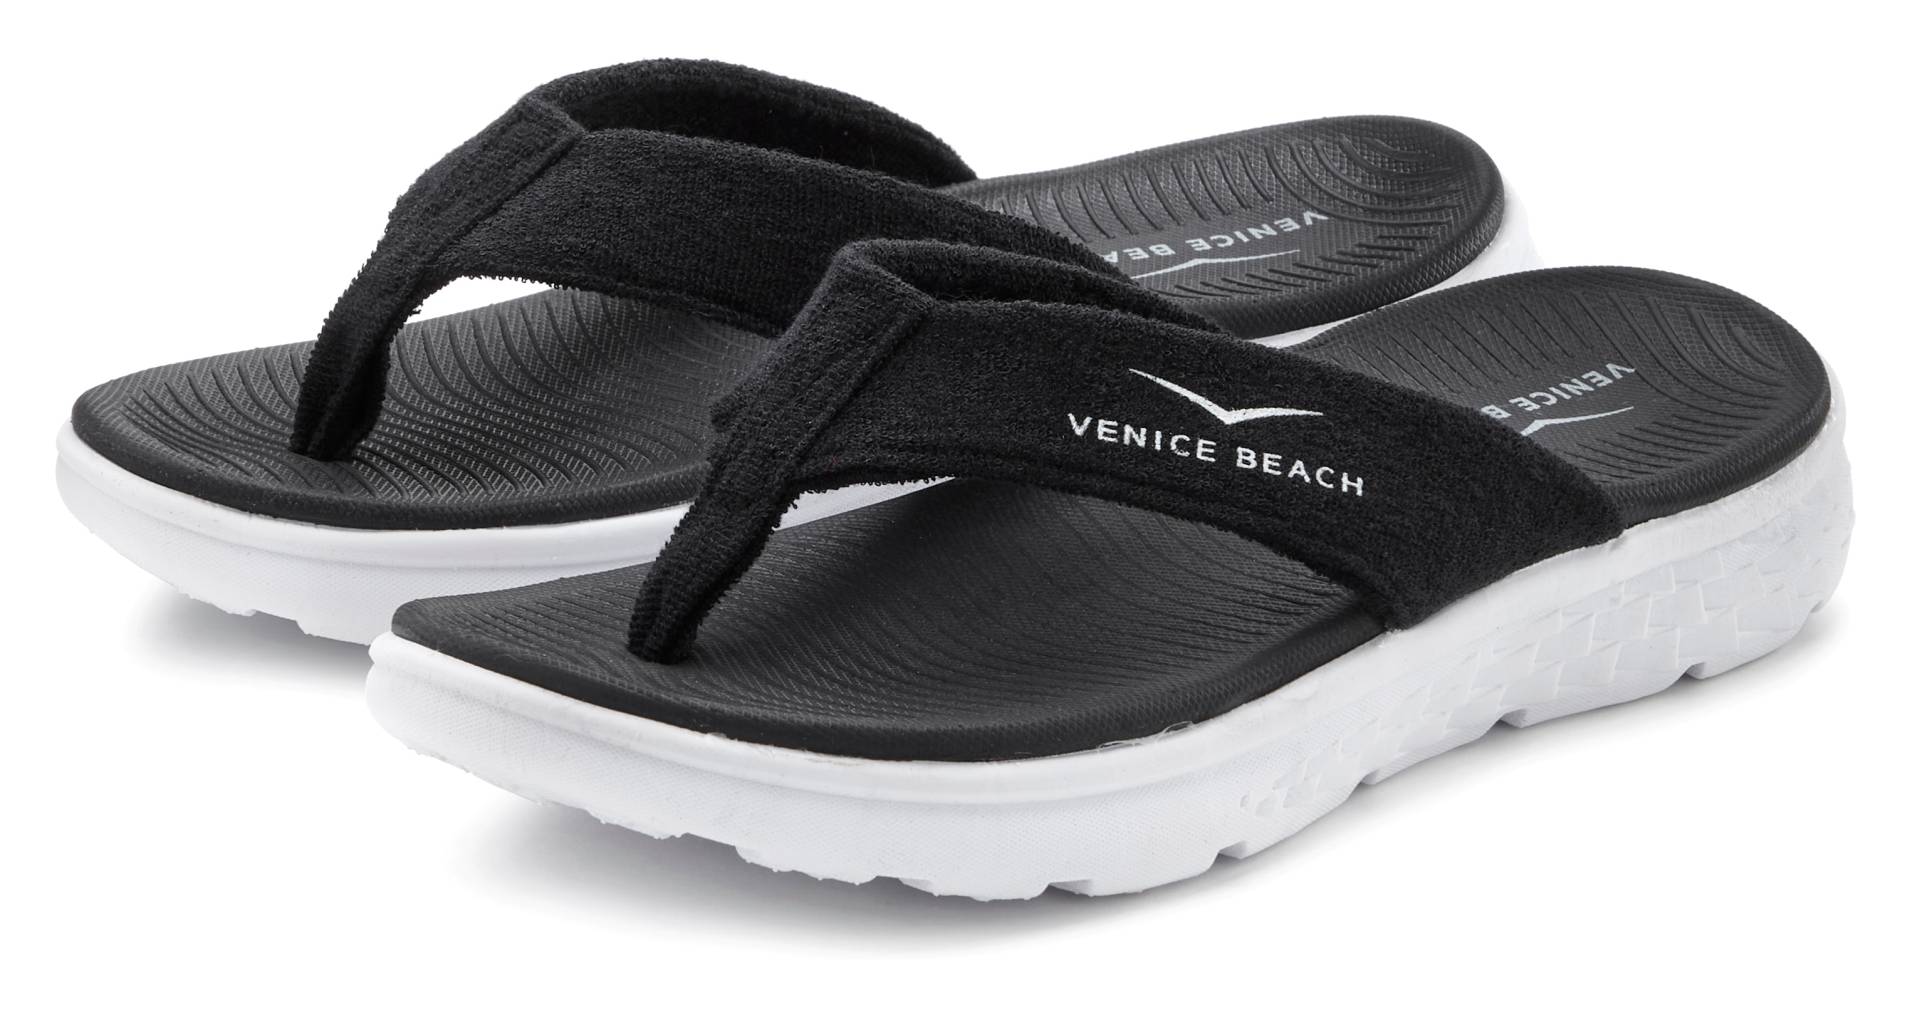 Venice Beach Badezehentrenner, Sandale, Pantolette, Badeschuh ultraleicht im sportiven Look VEGAN von Venice Beach